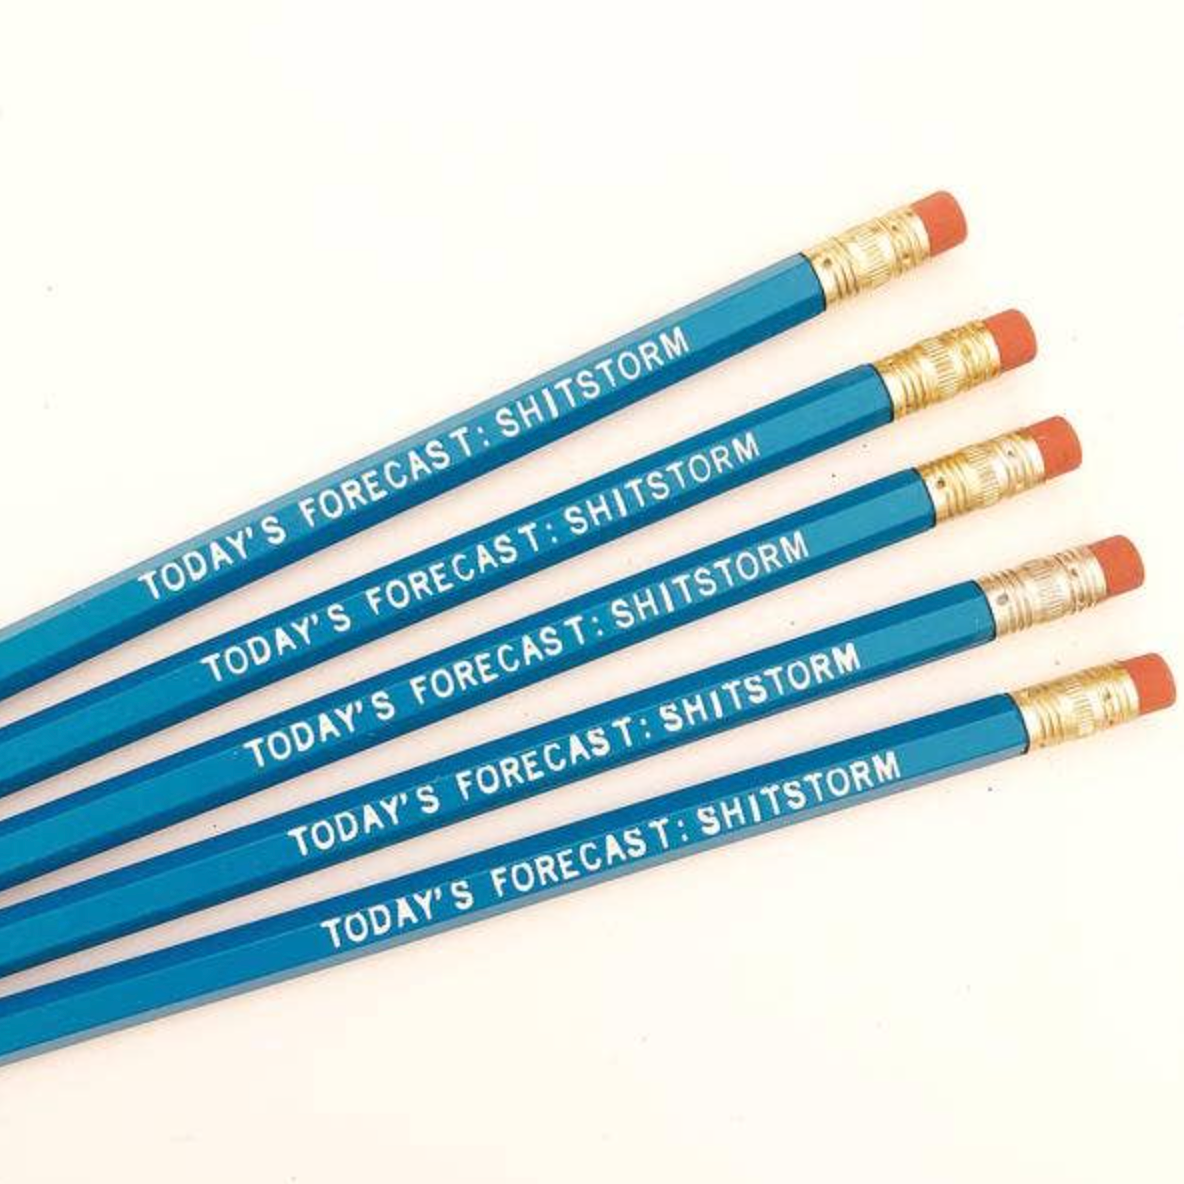 Today's Forecast Shitstorm Pencil Set